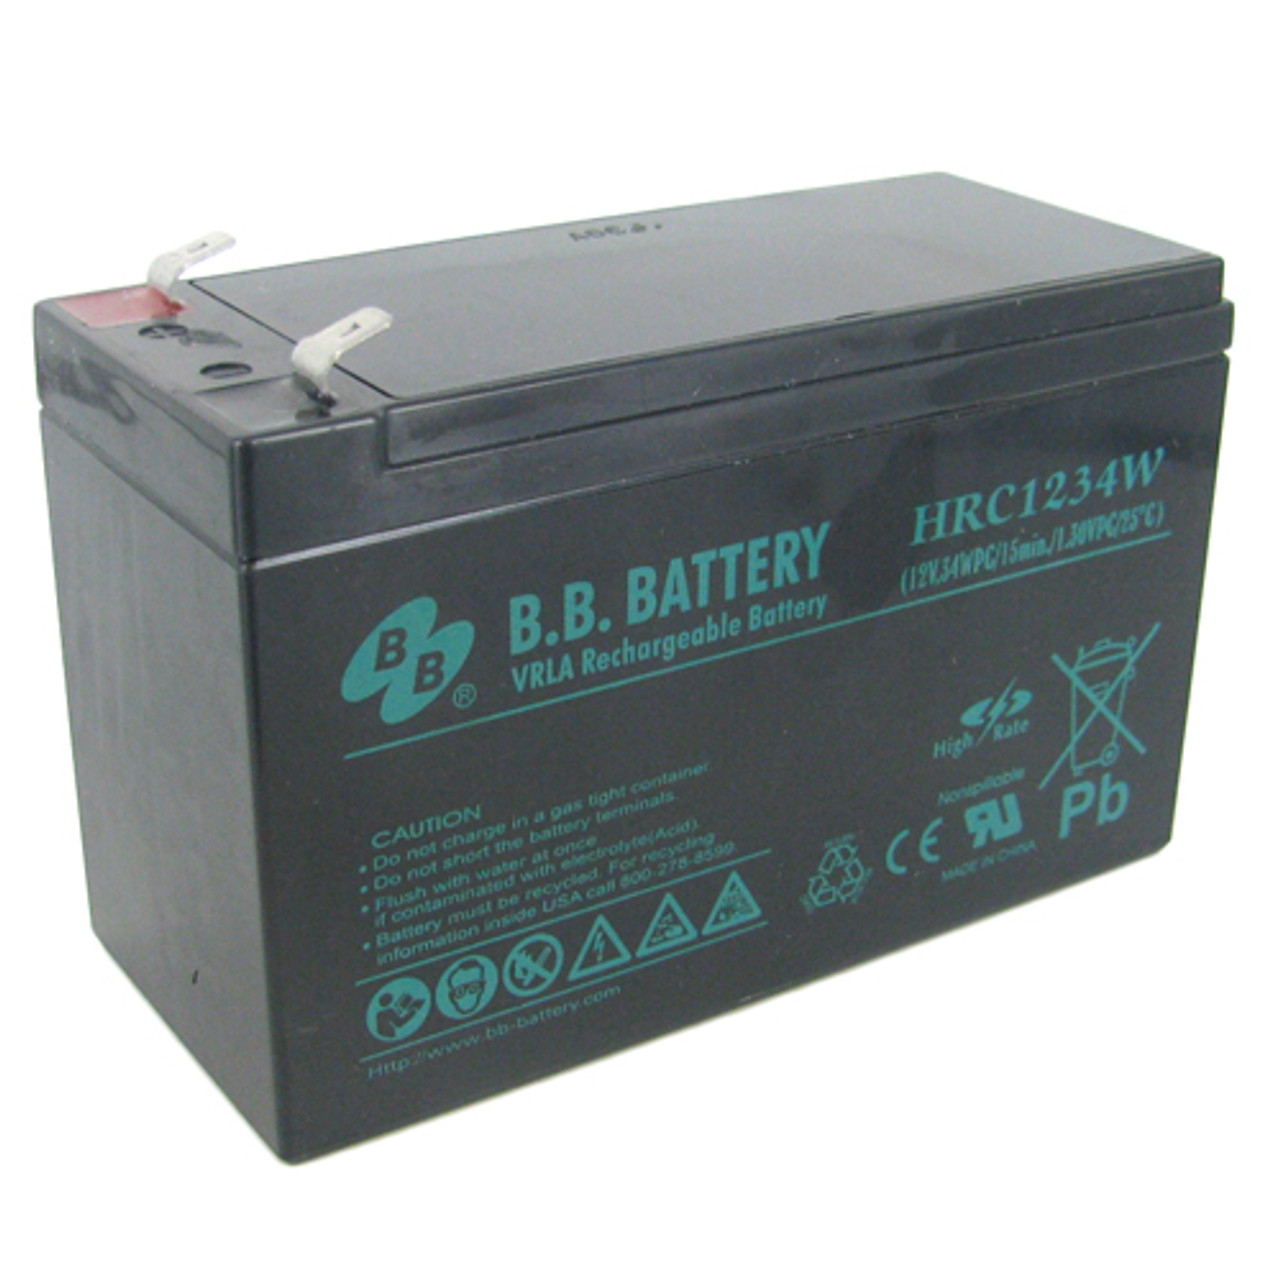 B b battery. B.B. Battery hrc1234w 9 а·ч. Аккумулятор BB Battery sh1228w. Аккумуляторная батарея HR 1234w. Аккумуляторная батарейка b. b. Battery HR 9-12.